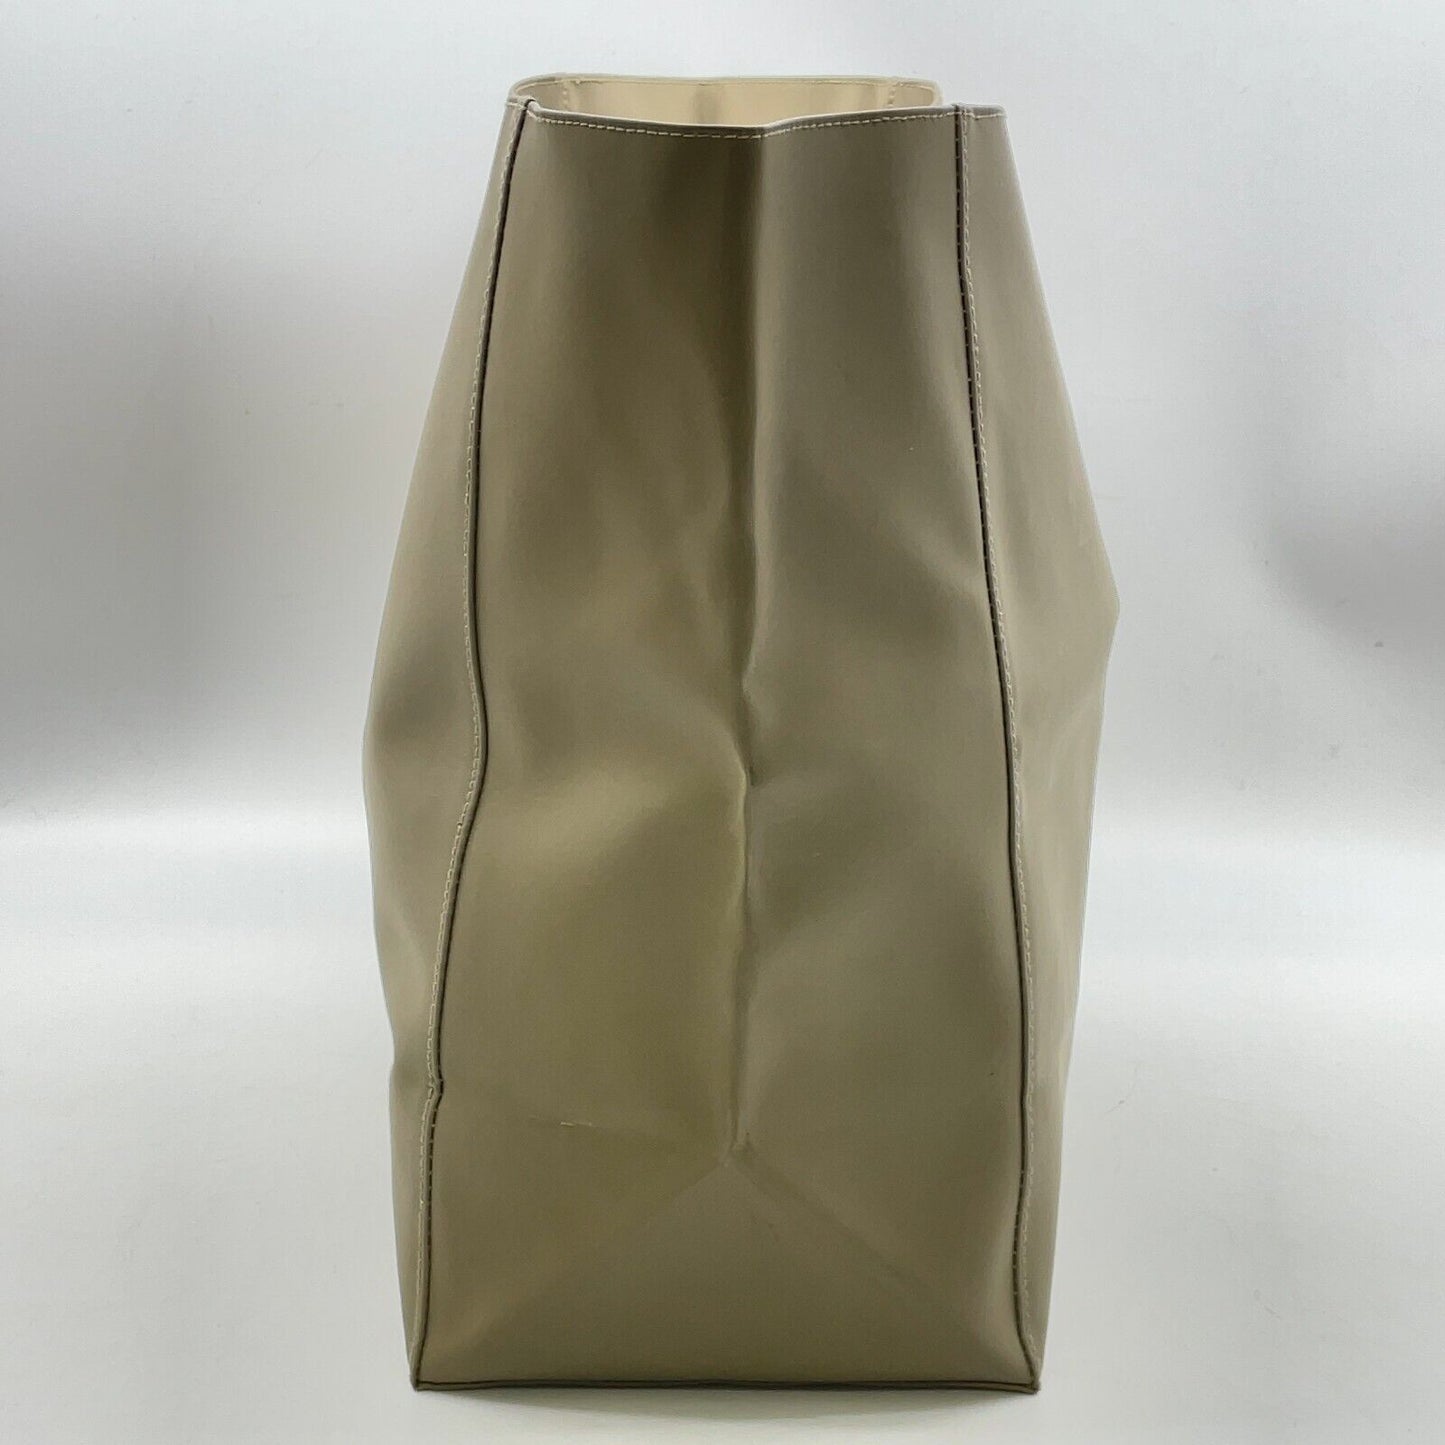 Original/Auth Louis Vuitton - Cup 2003 Handtasche Box - Limited - Khaki Grün